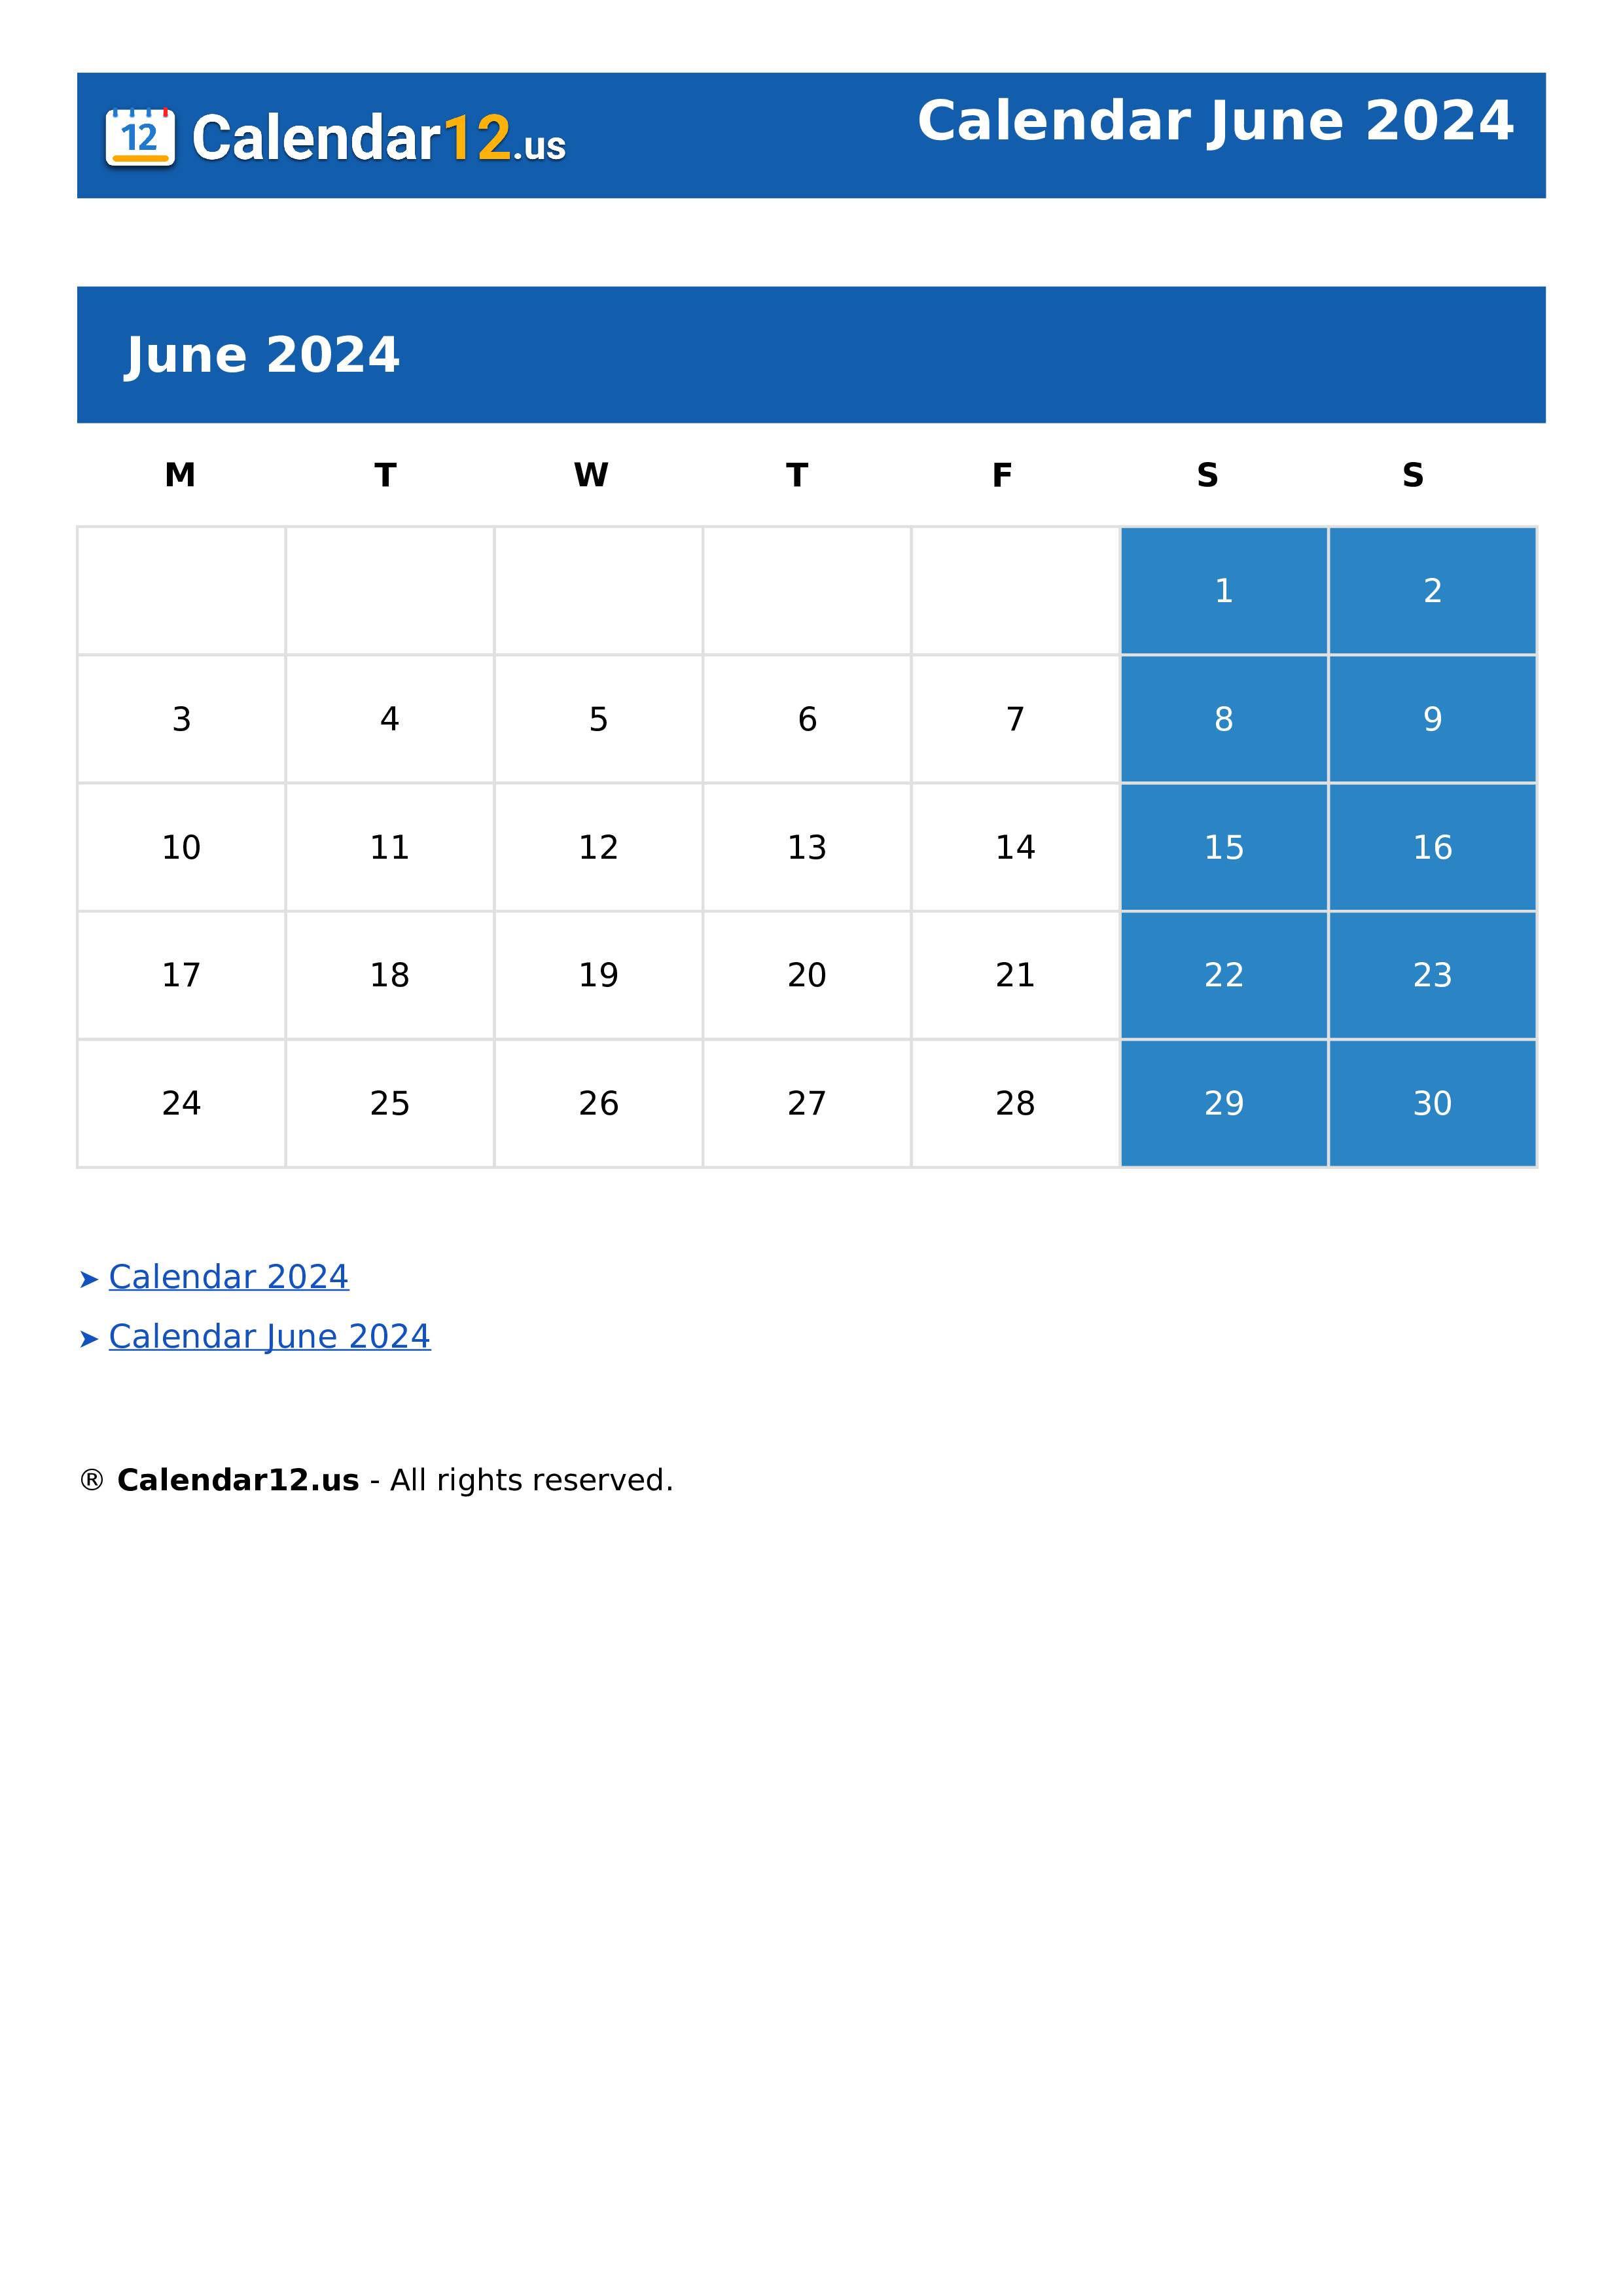 Calendar June 2024